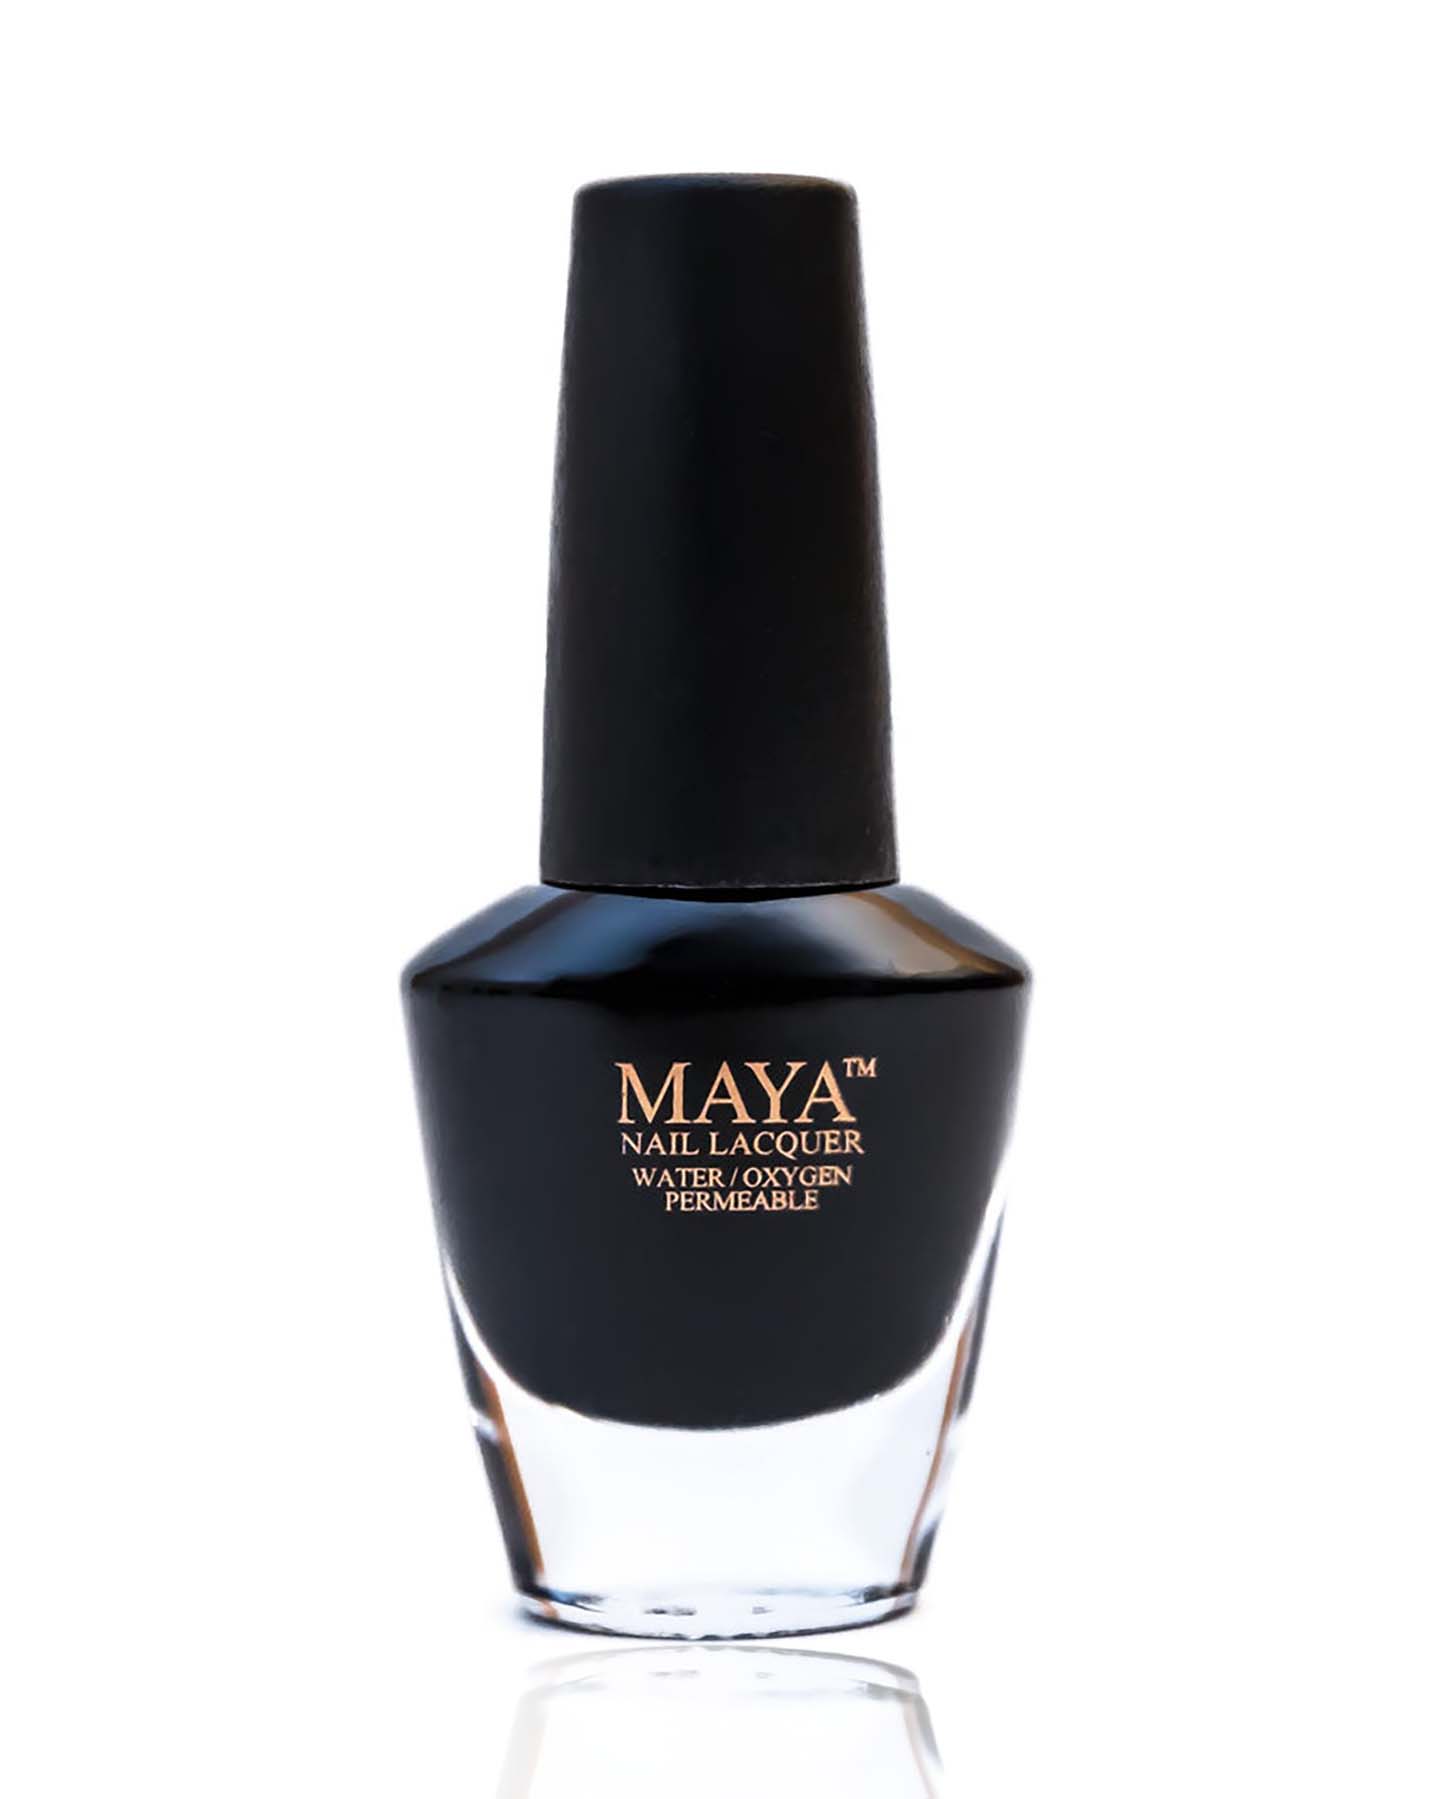 Лак халяль. Халал лак. Maya — Nail Lacquer Water/Oxygen permeable. Халяль лак. Maya лак для ногтей.